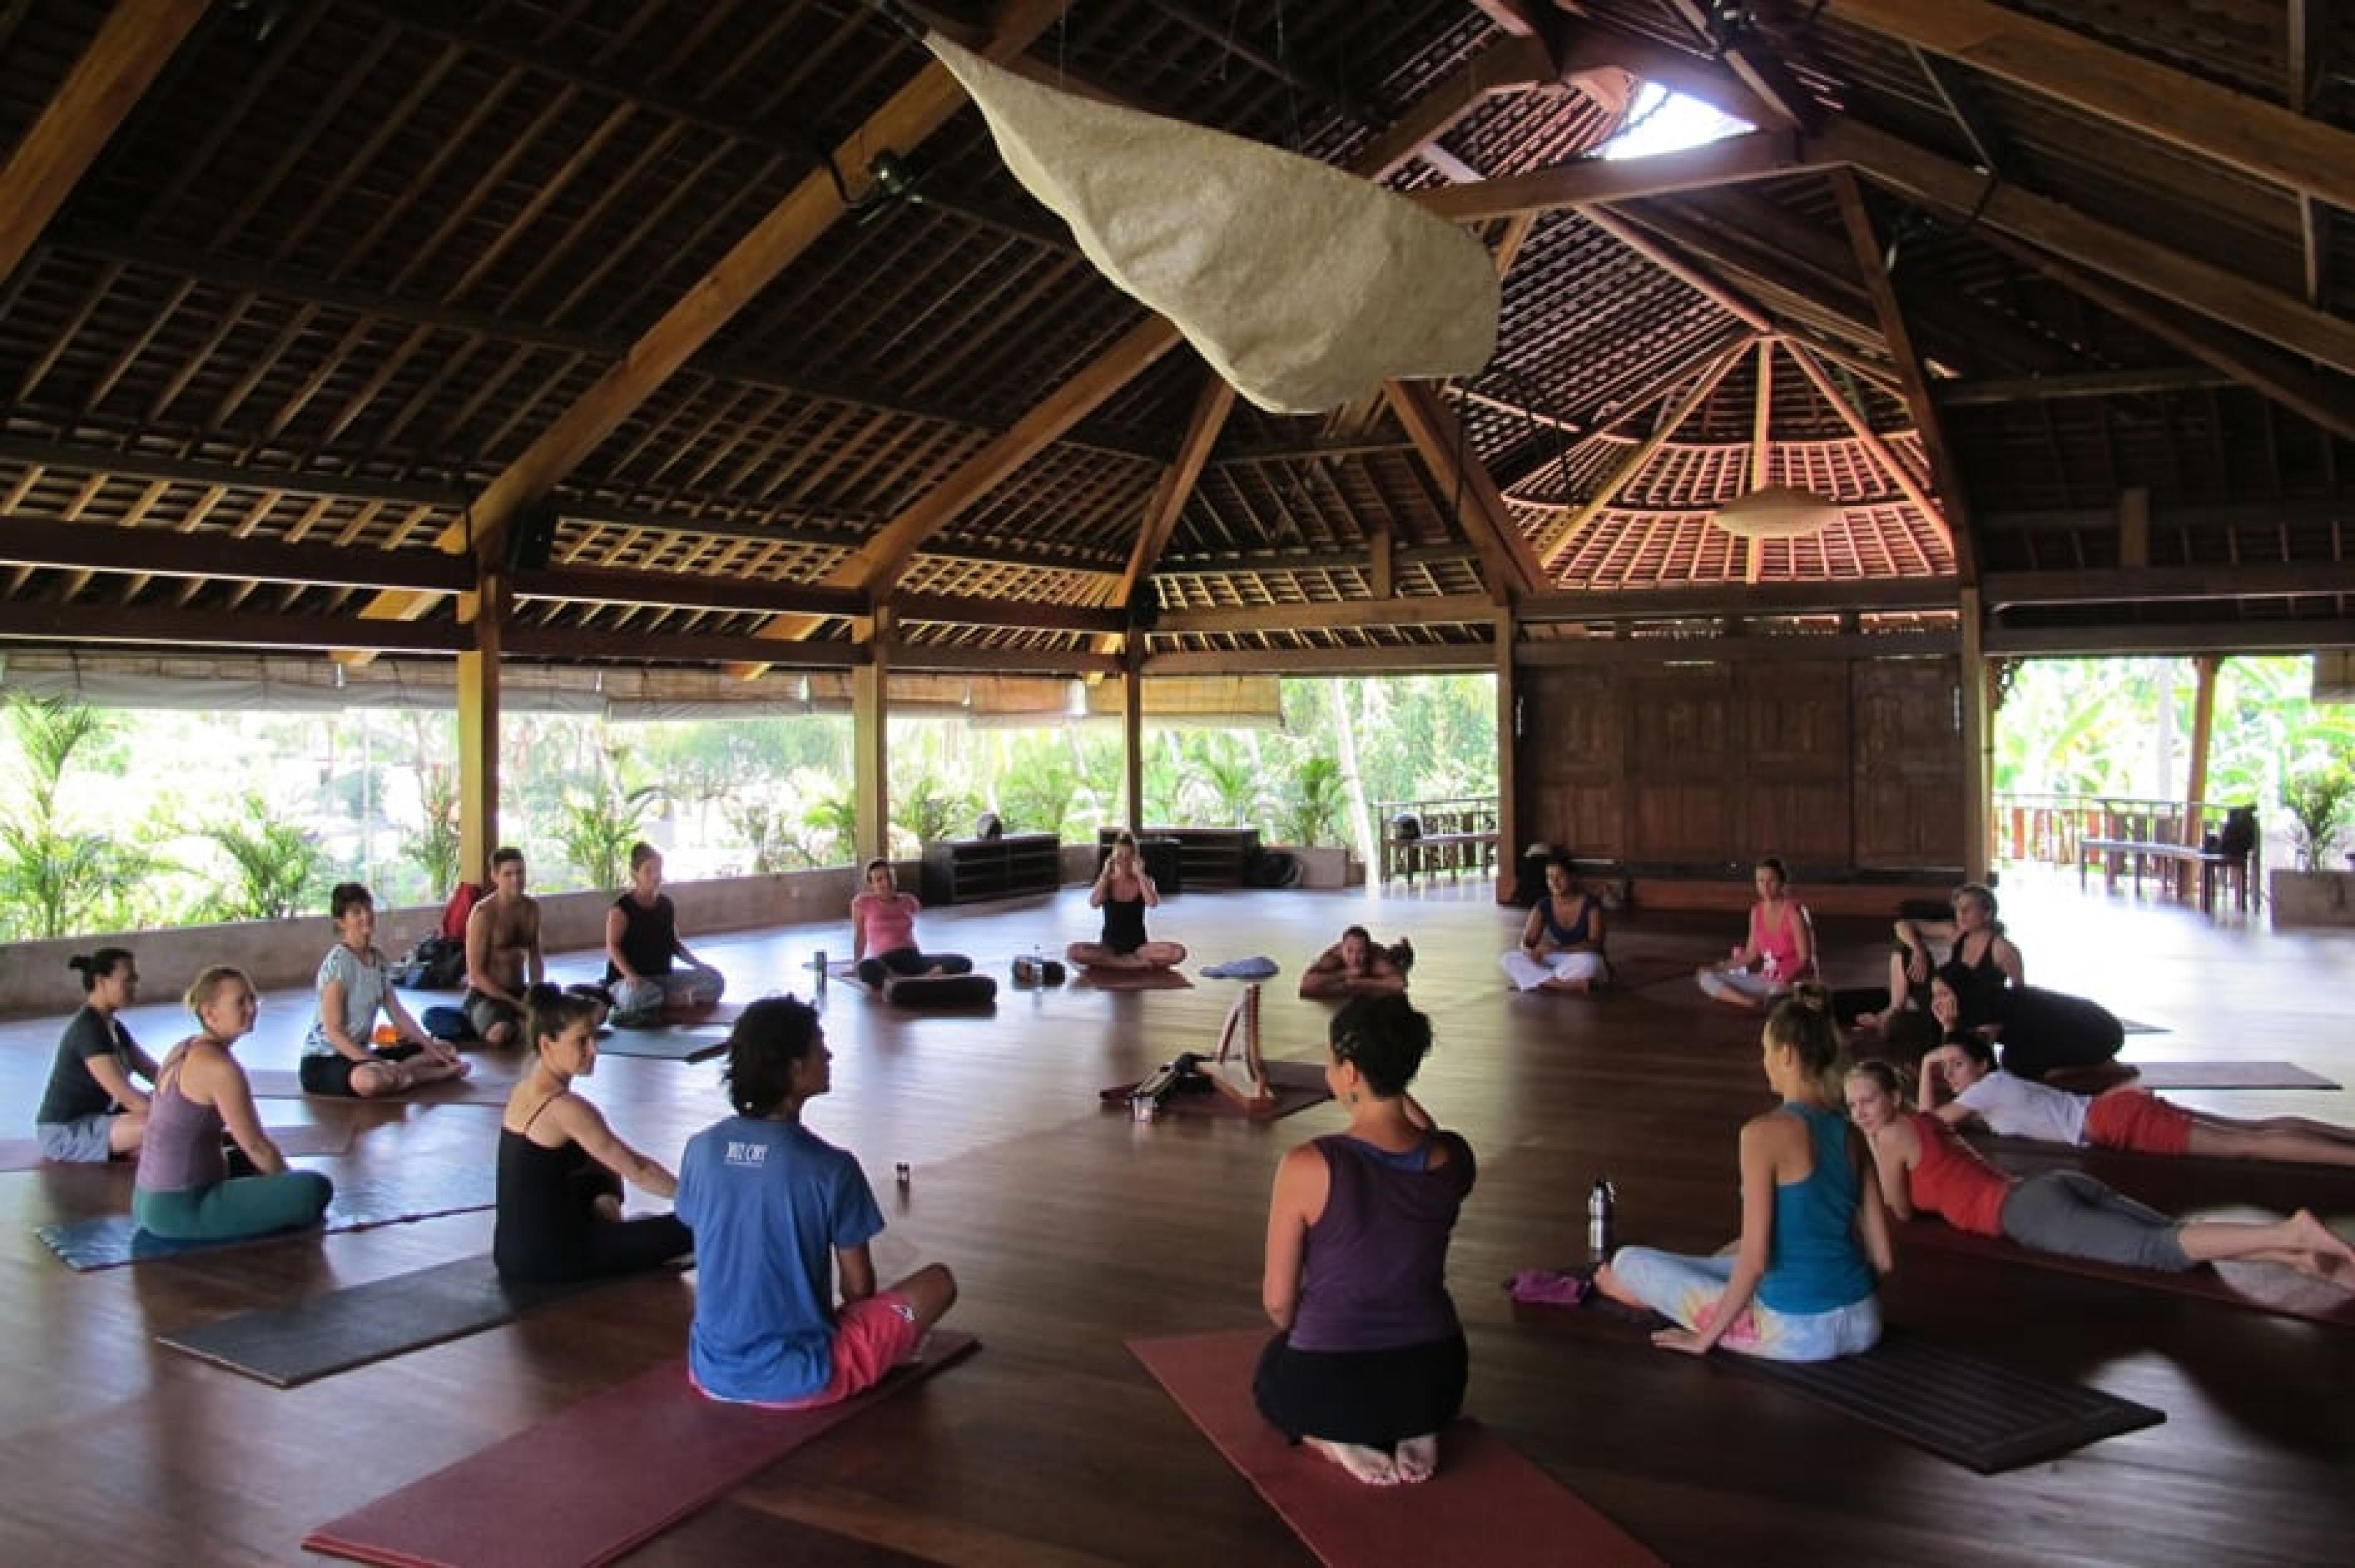 People at The Yoga Barn , Bali, Indonesia